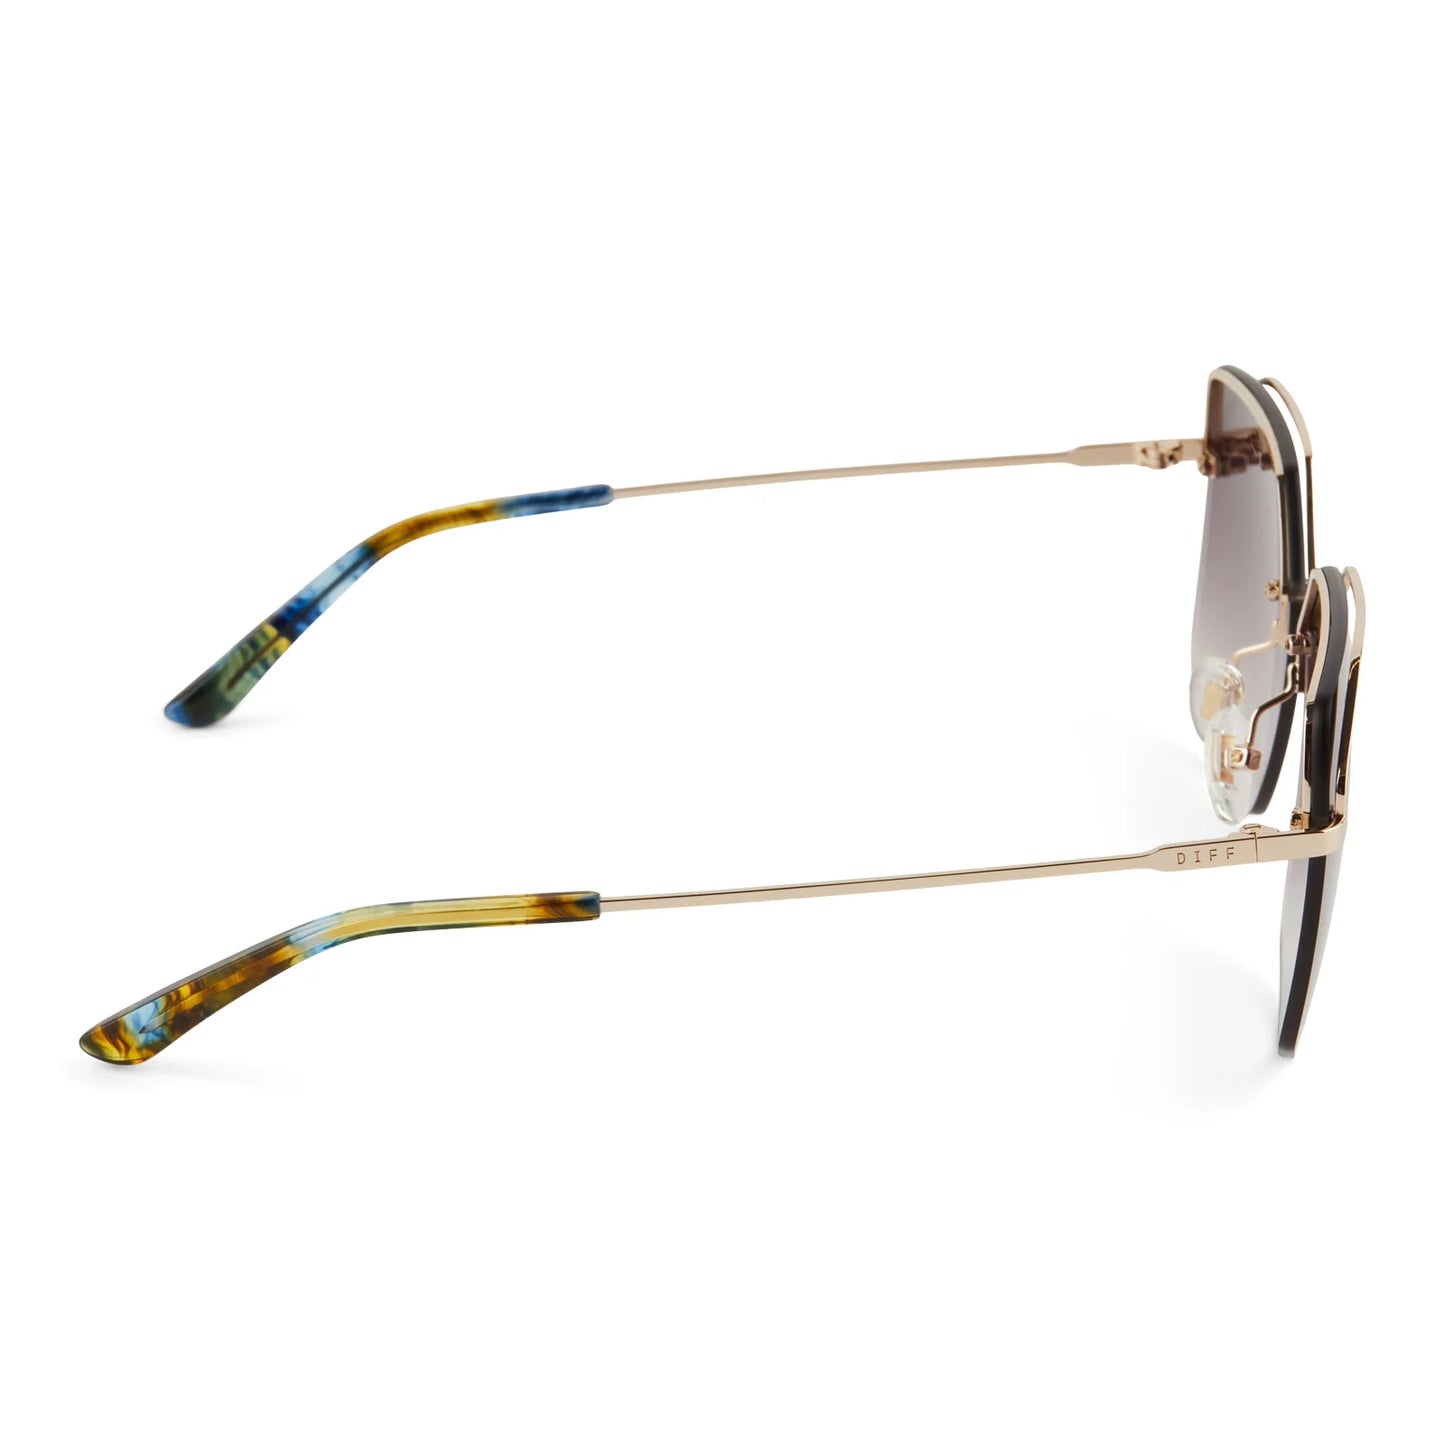 DIFF Eyewear - Bree - Gold Brown Gradient Polarized Sunglasses